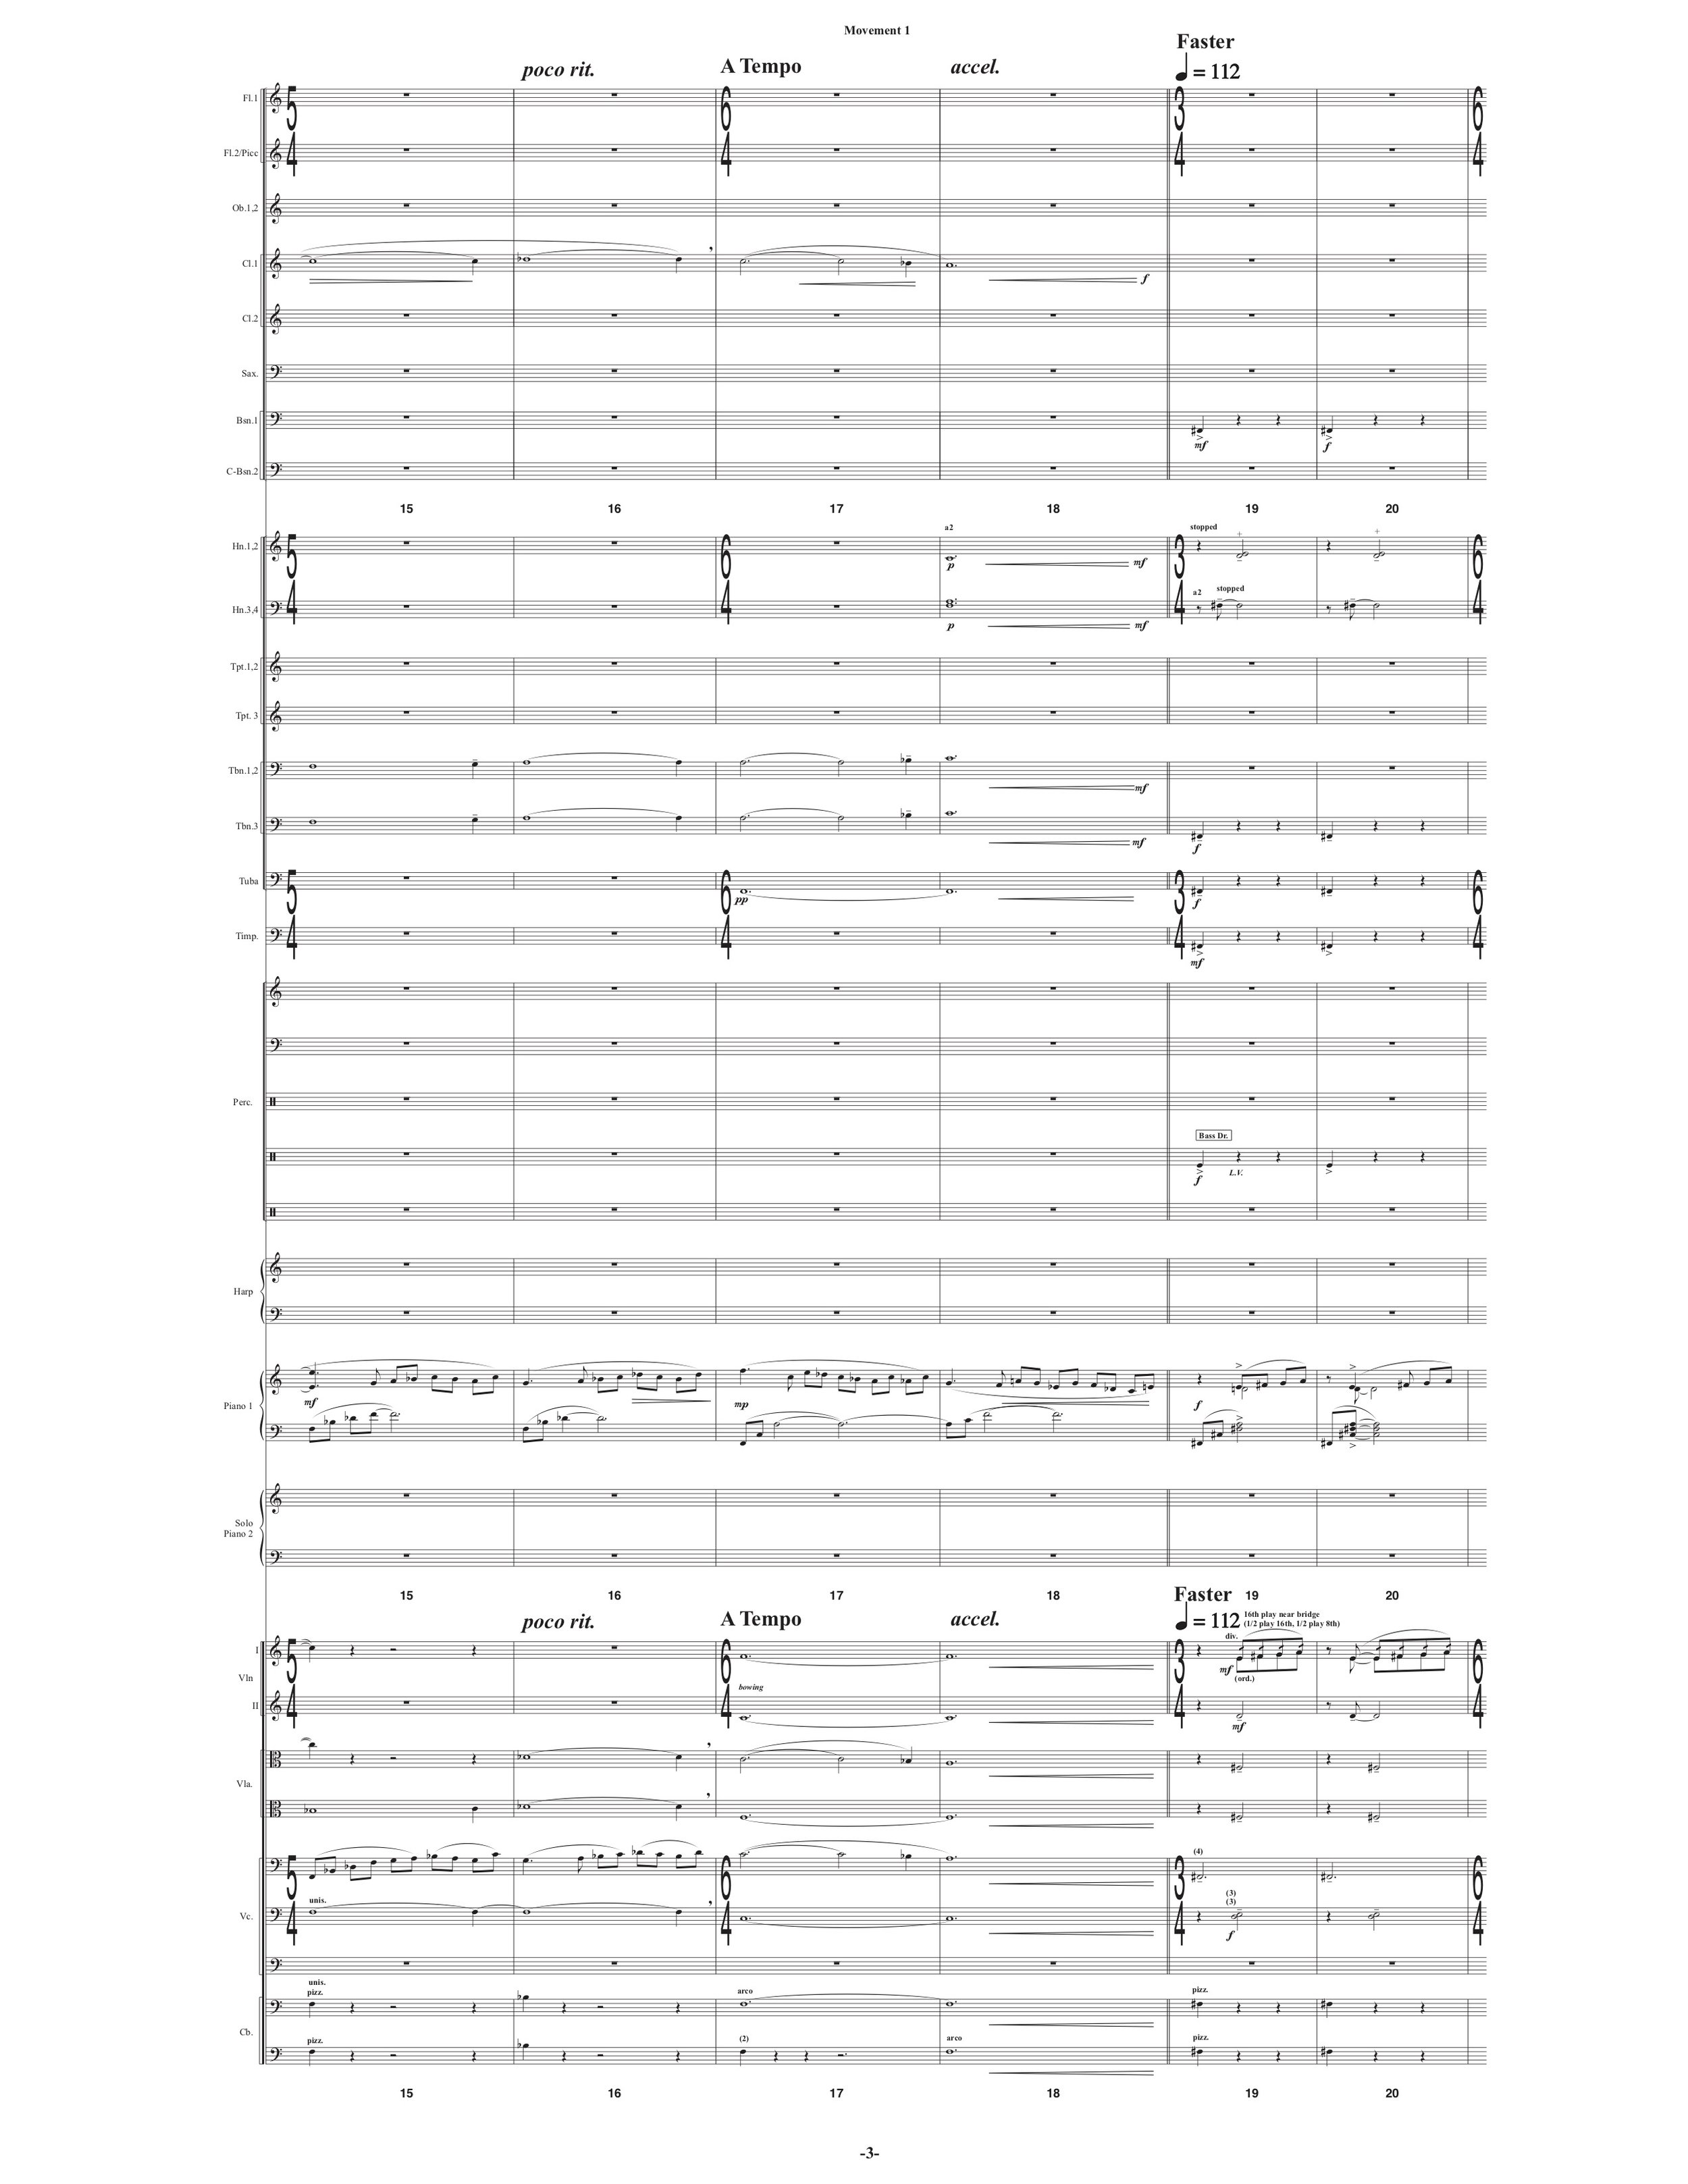 Symphony_Orch & 2 Pianos p8.jpg